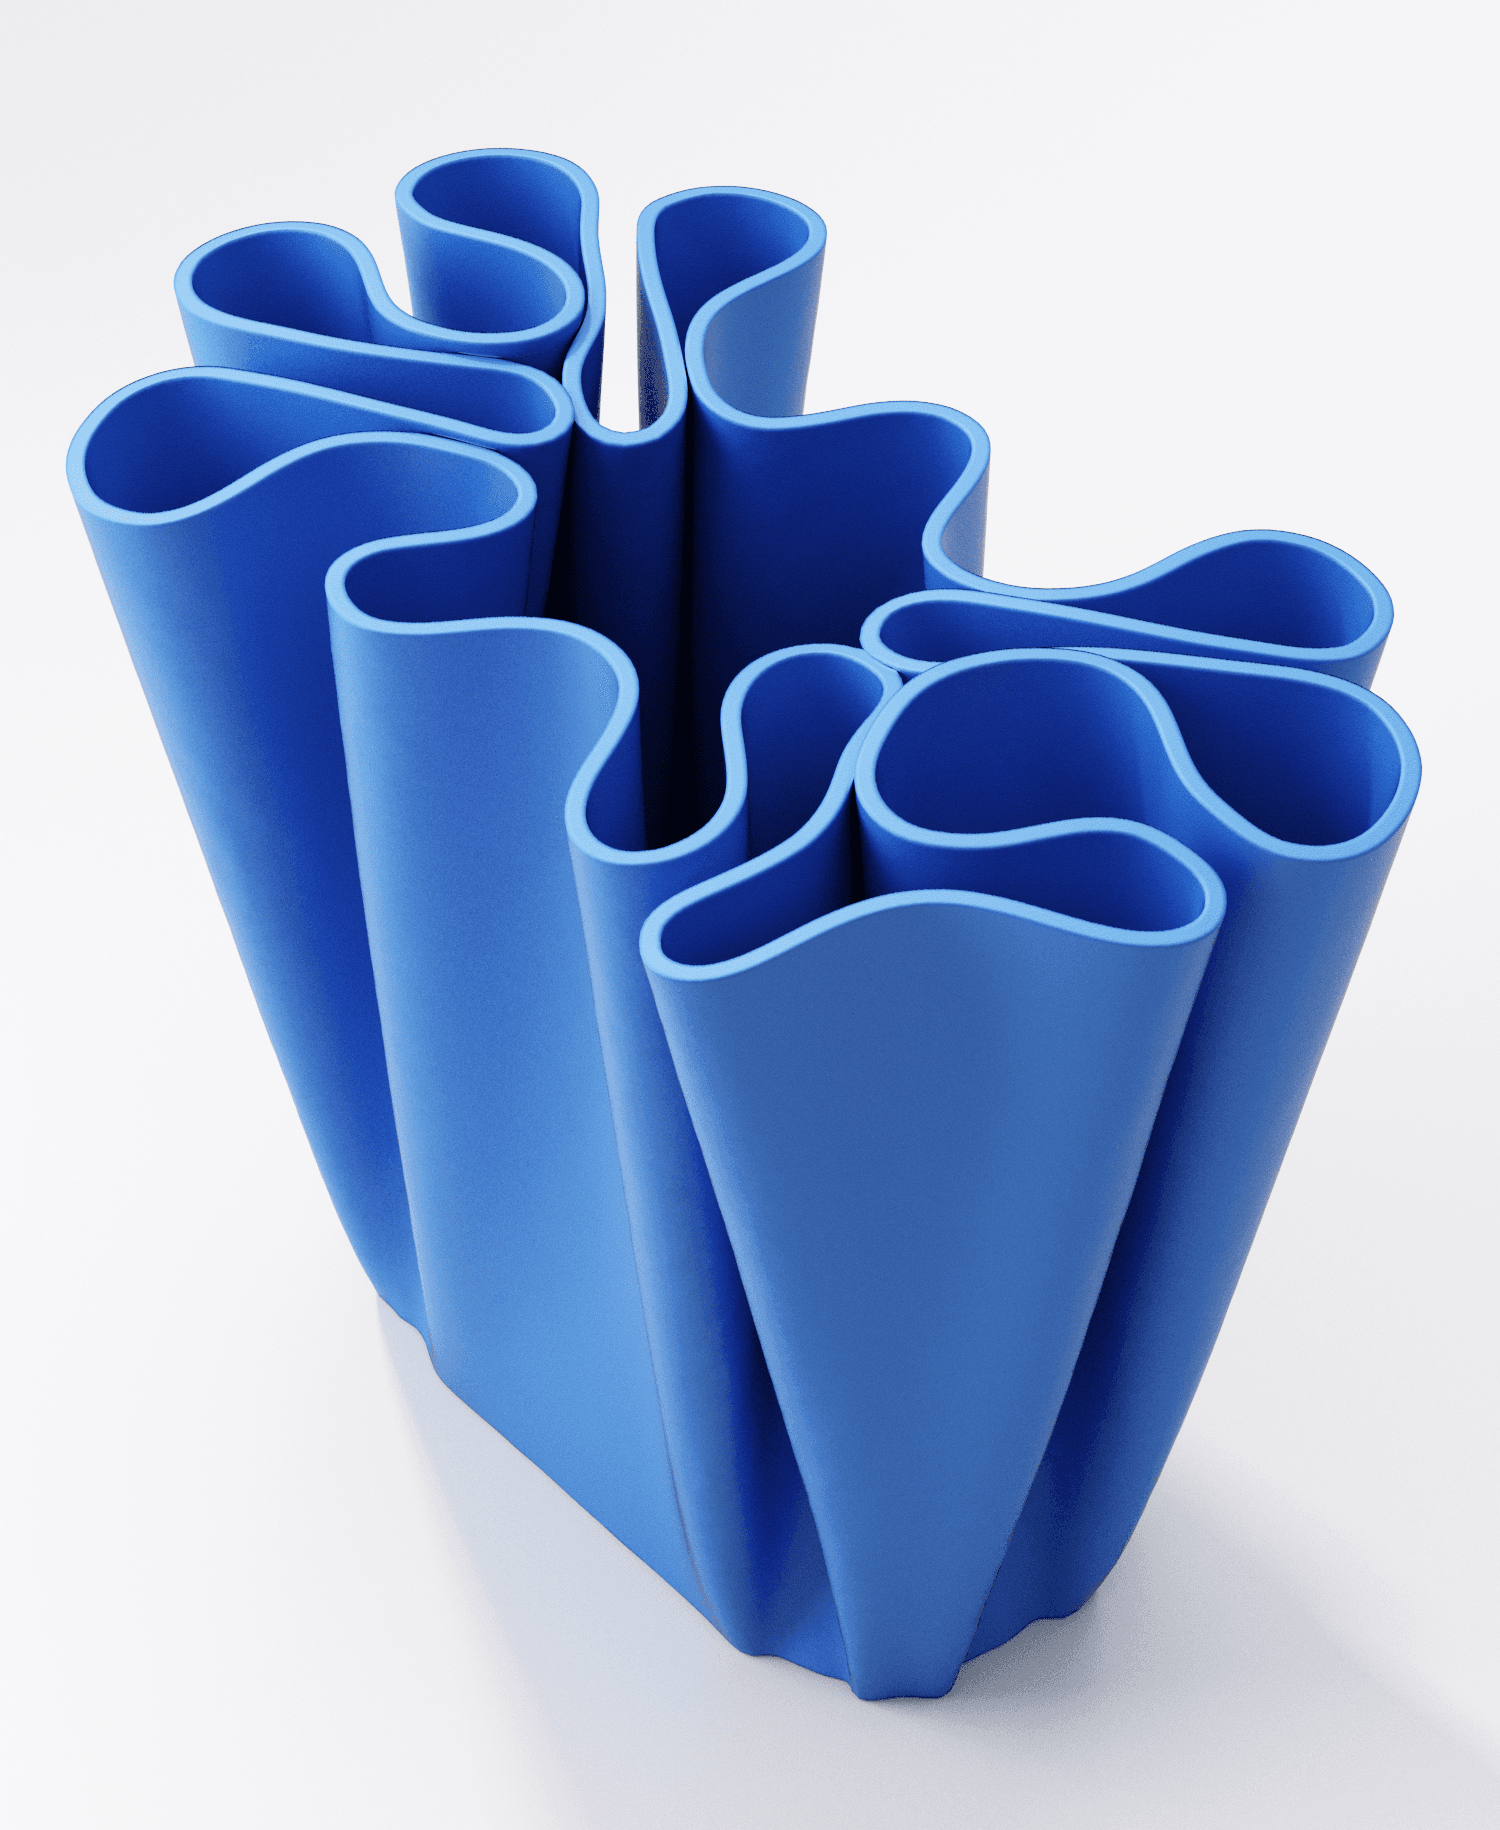 Fold Vase 2 3d model